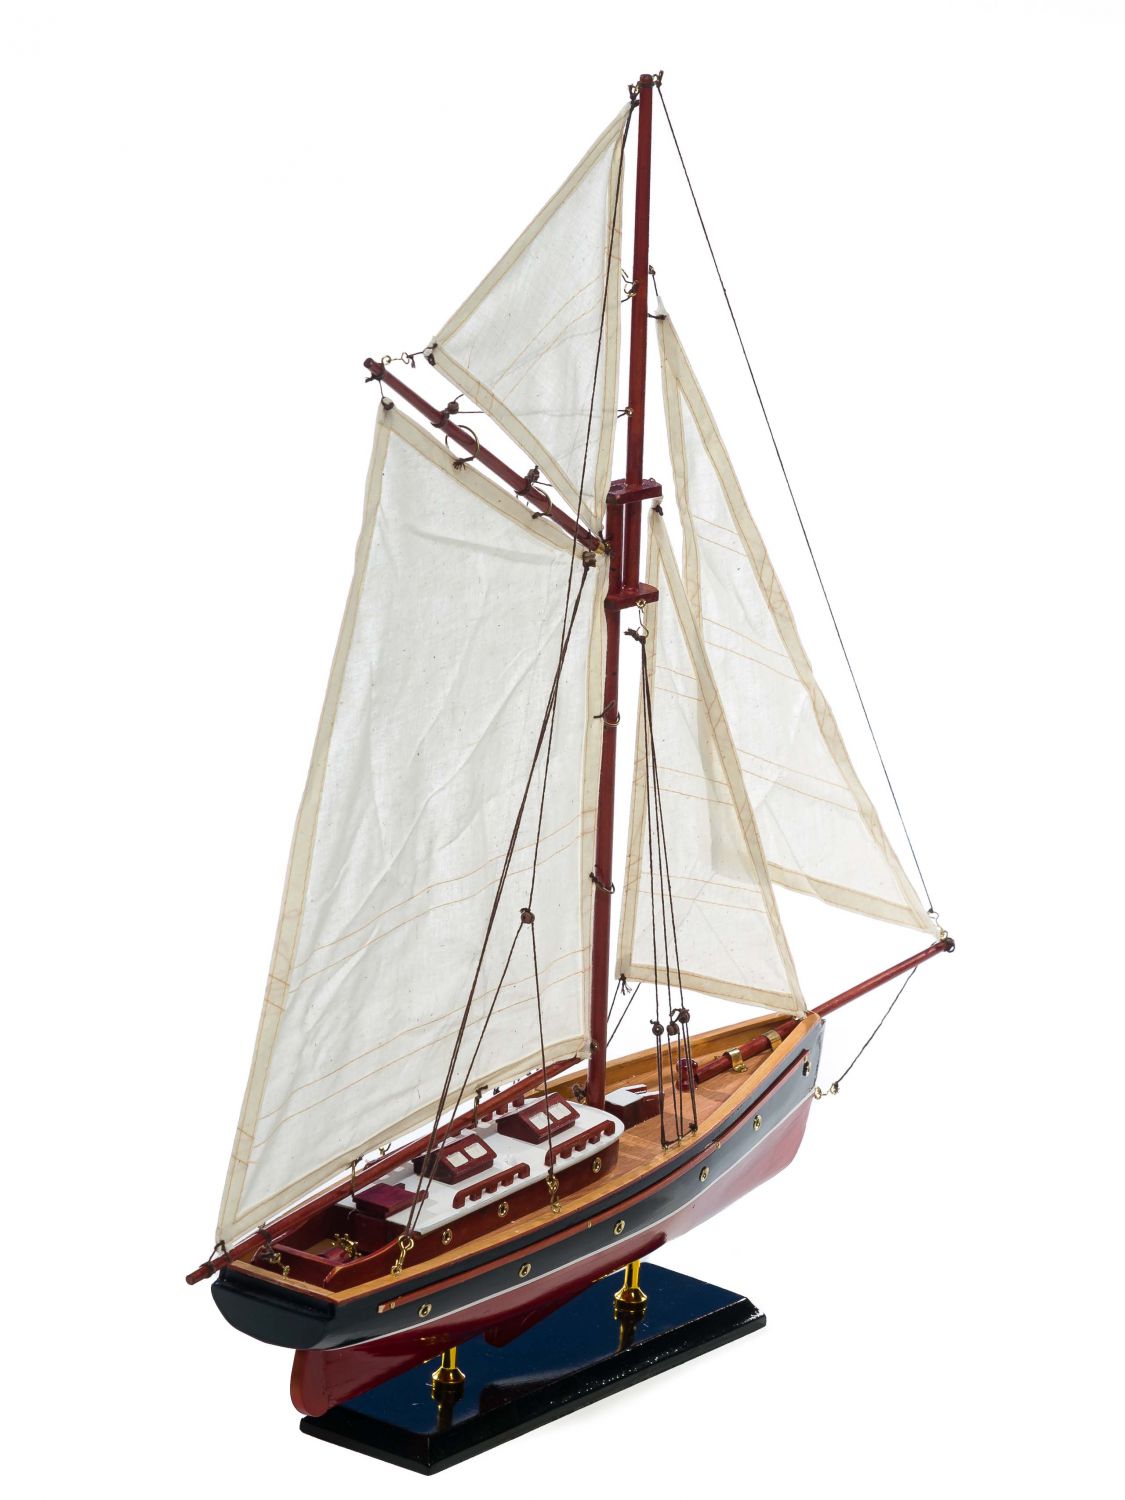 Nautical memorabilia solid model ship yacht boat wood 57.5cm no kit | eBay